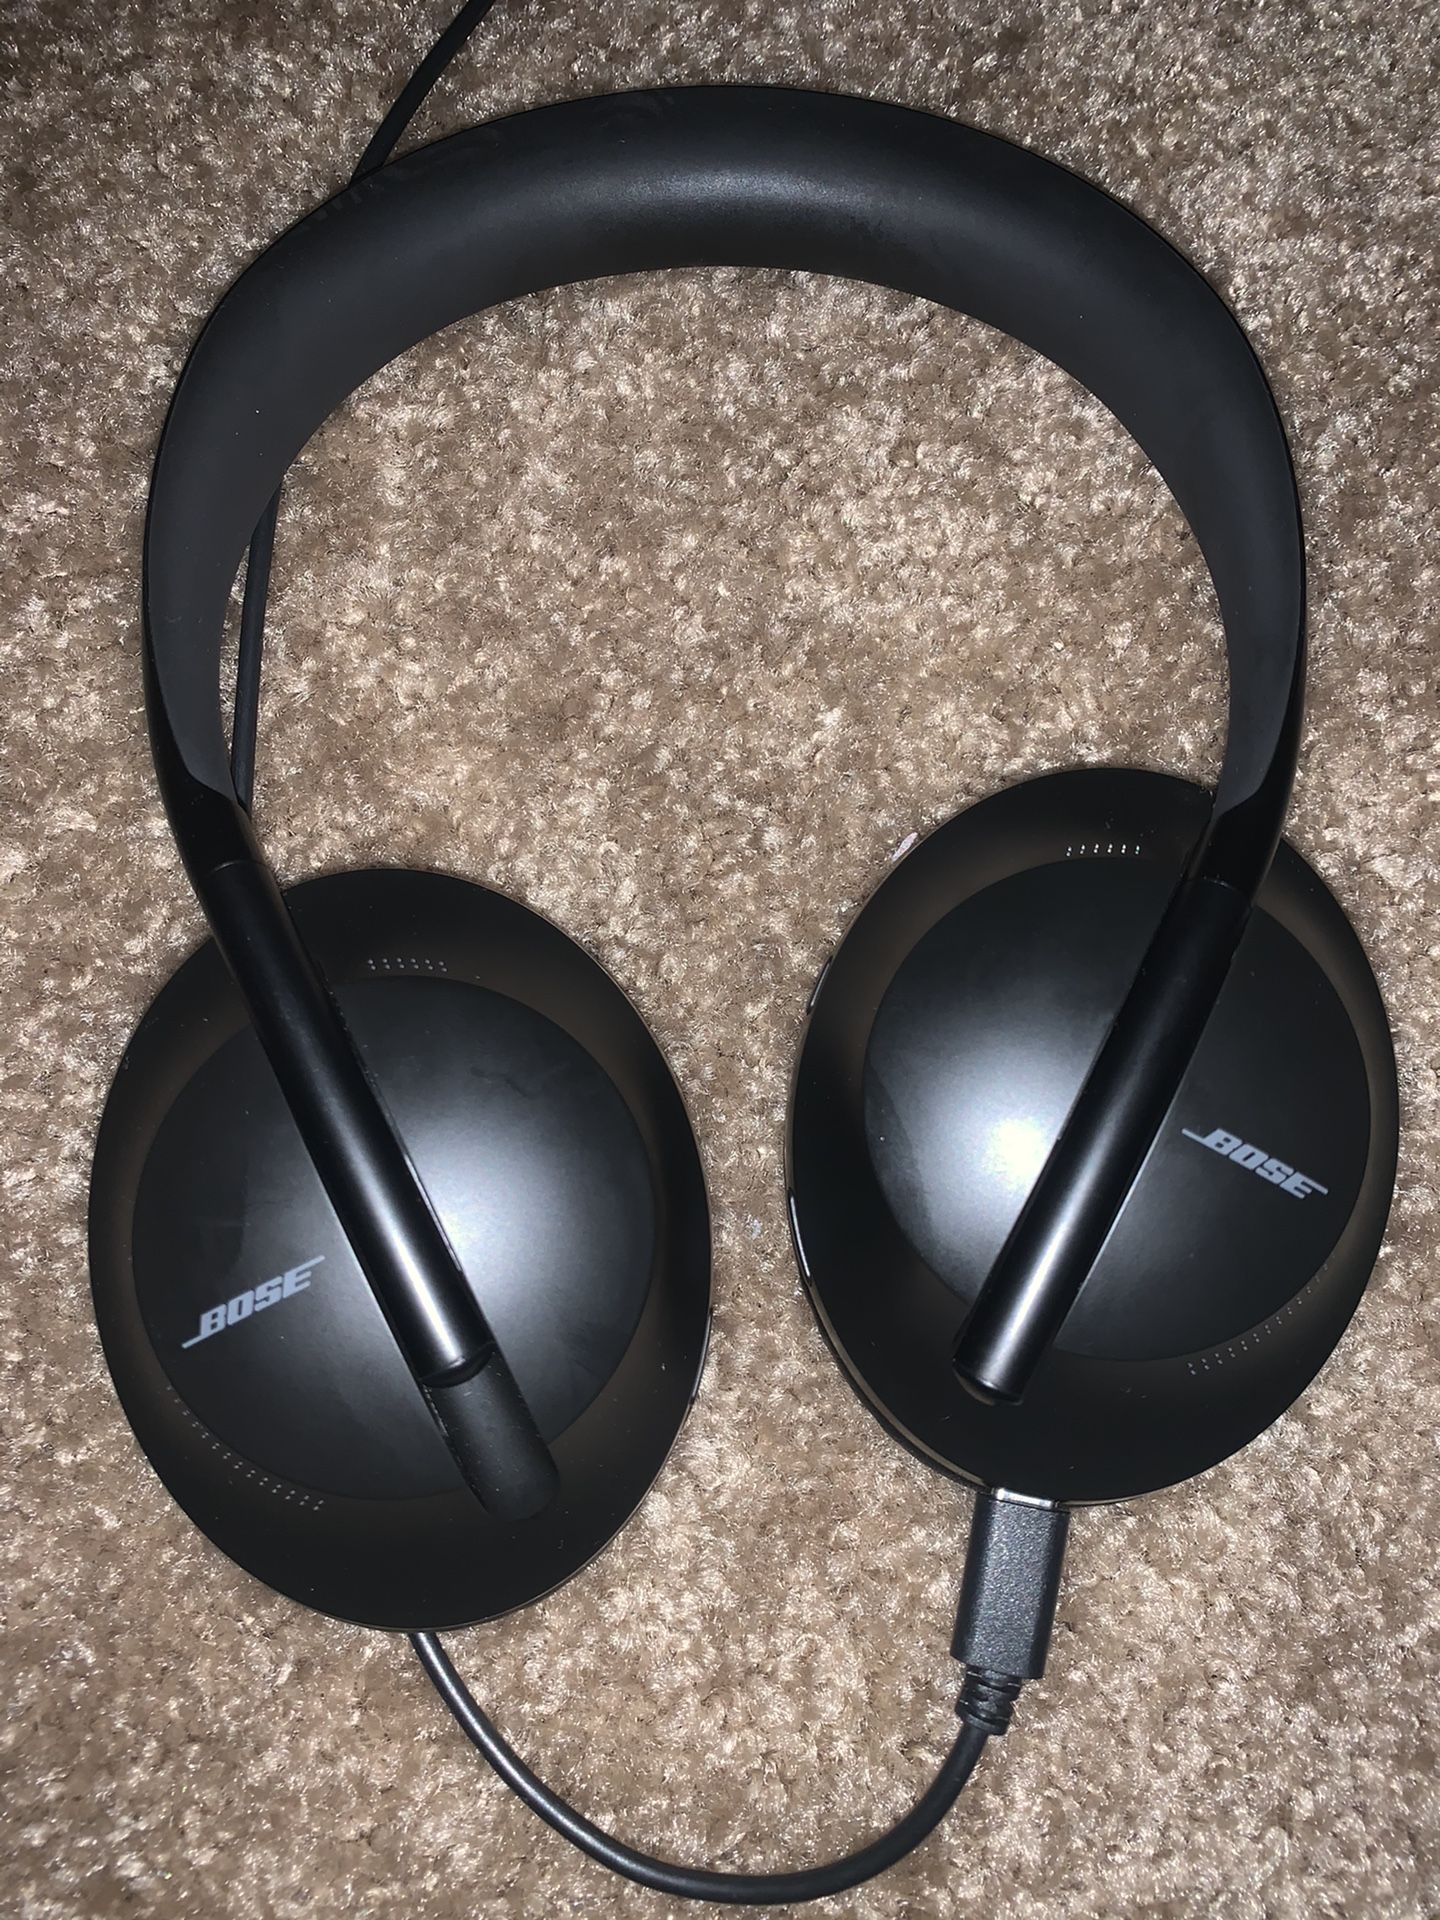 Bose 700 noise cancelling headphones